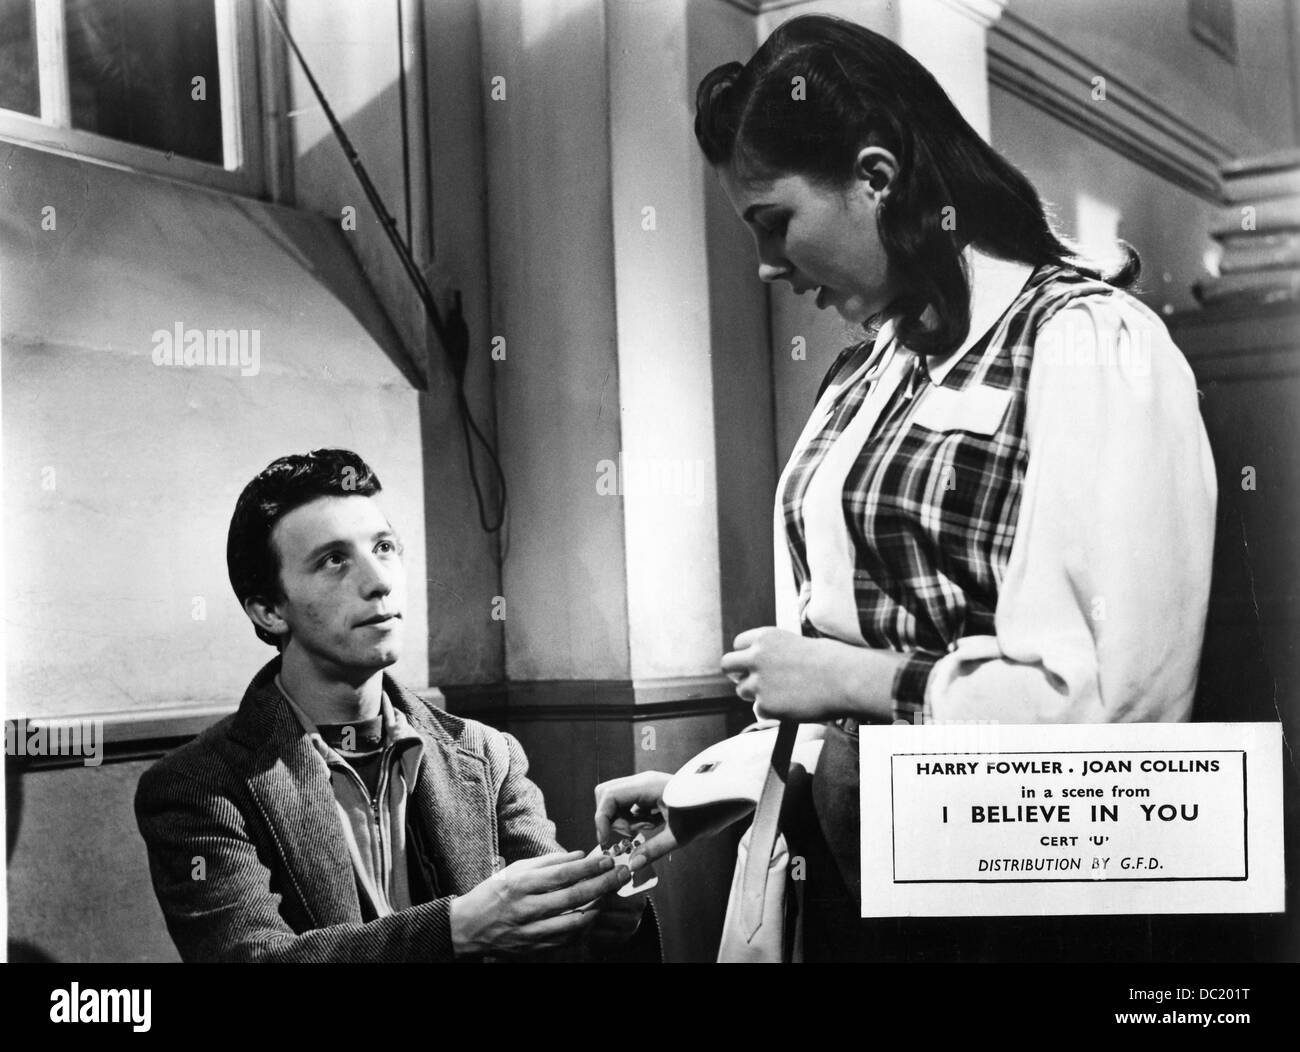 I BELIEVE IN YOU (1952) HARRY FOWLER, JOAN COLLINS BASIL DEARDEN (DIR) 005 MOVIESTORE COLLECTION LTD Stock Photo